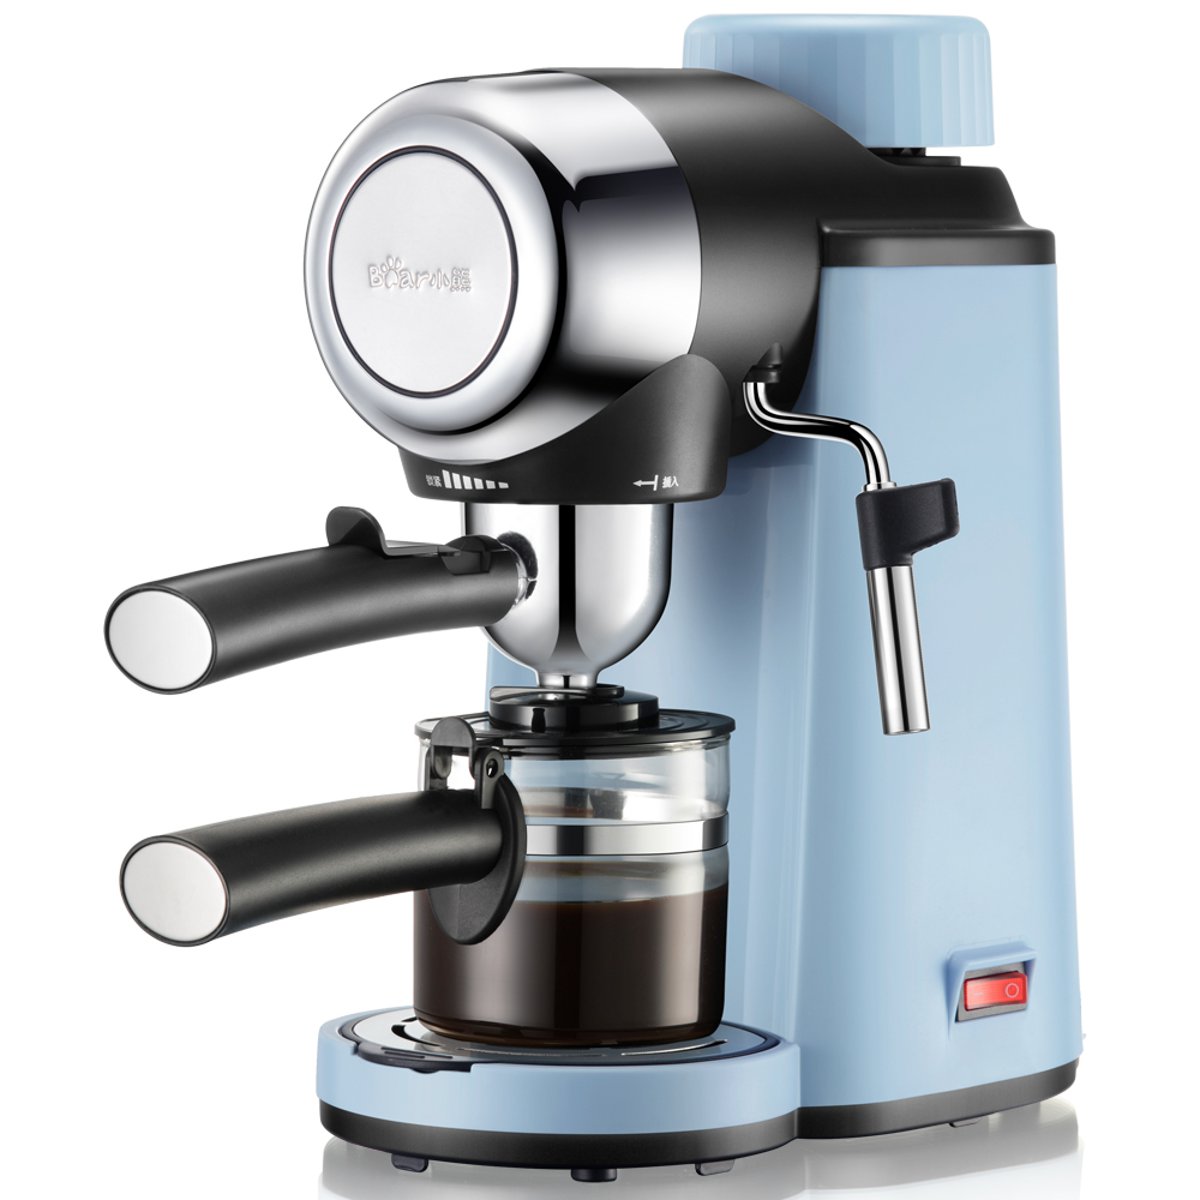 5-Bar-800W-Coffee-Machine-Espresso-Cappuccino-Latte-Drink-Maker-Milk-Steamer-1700197